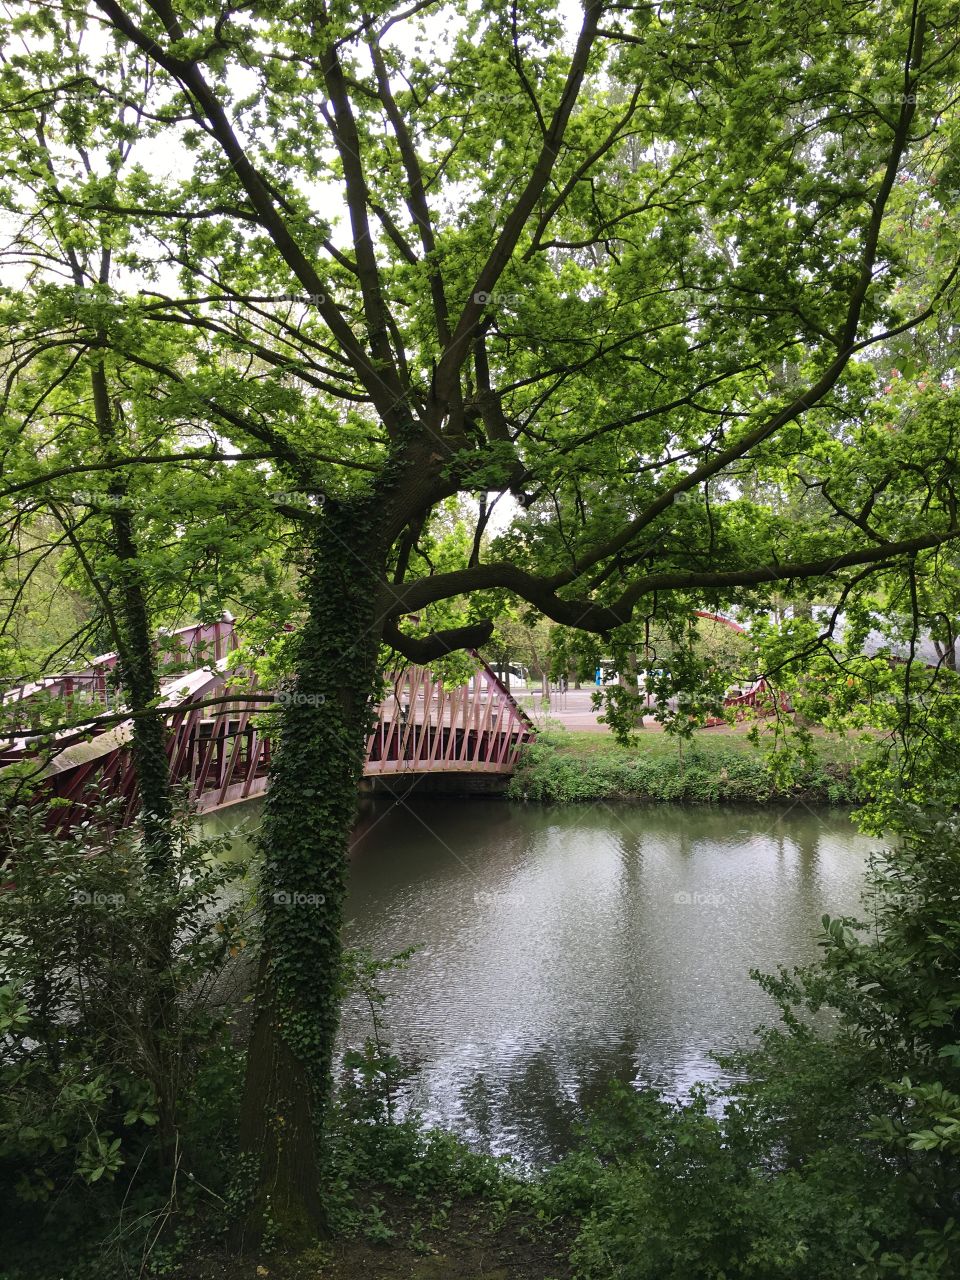 Bridge and a tree